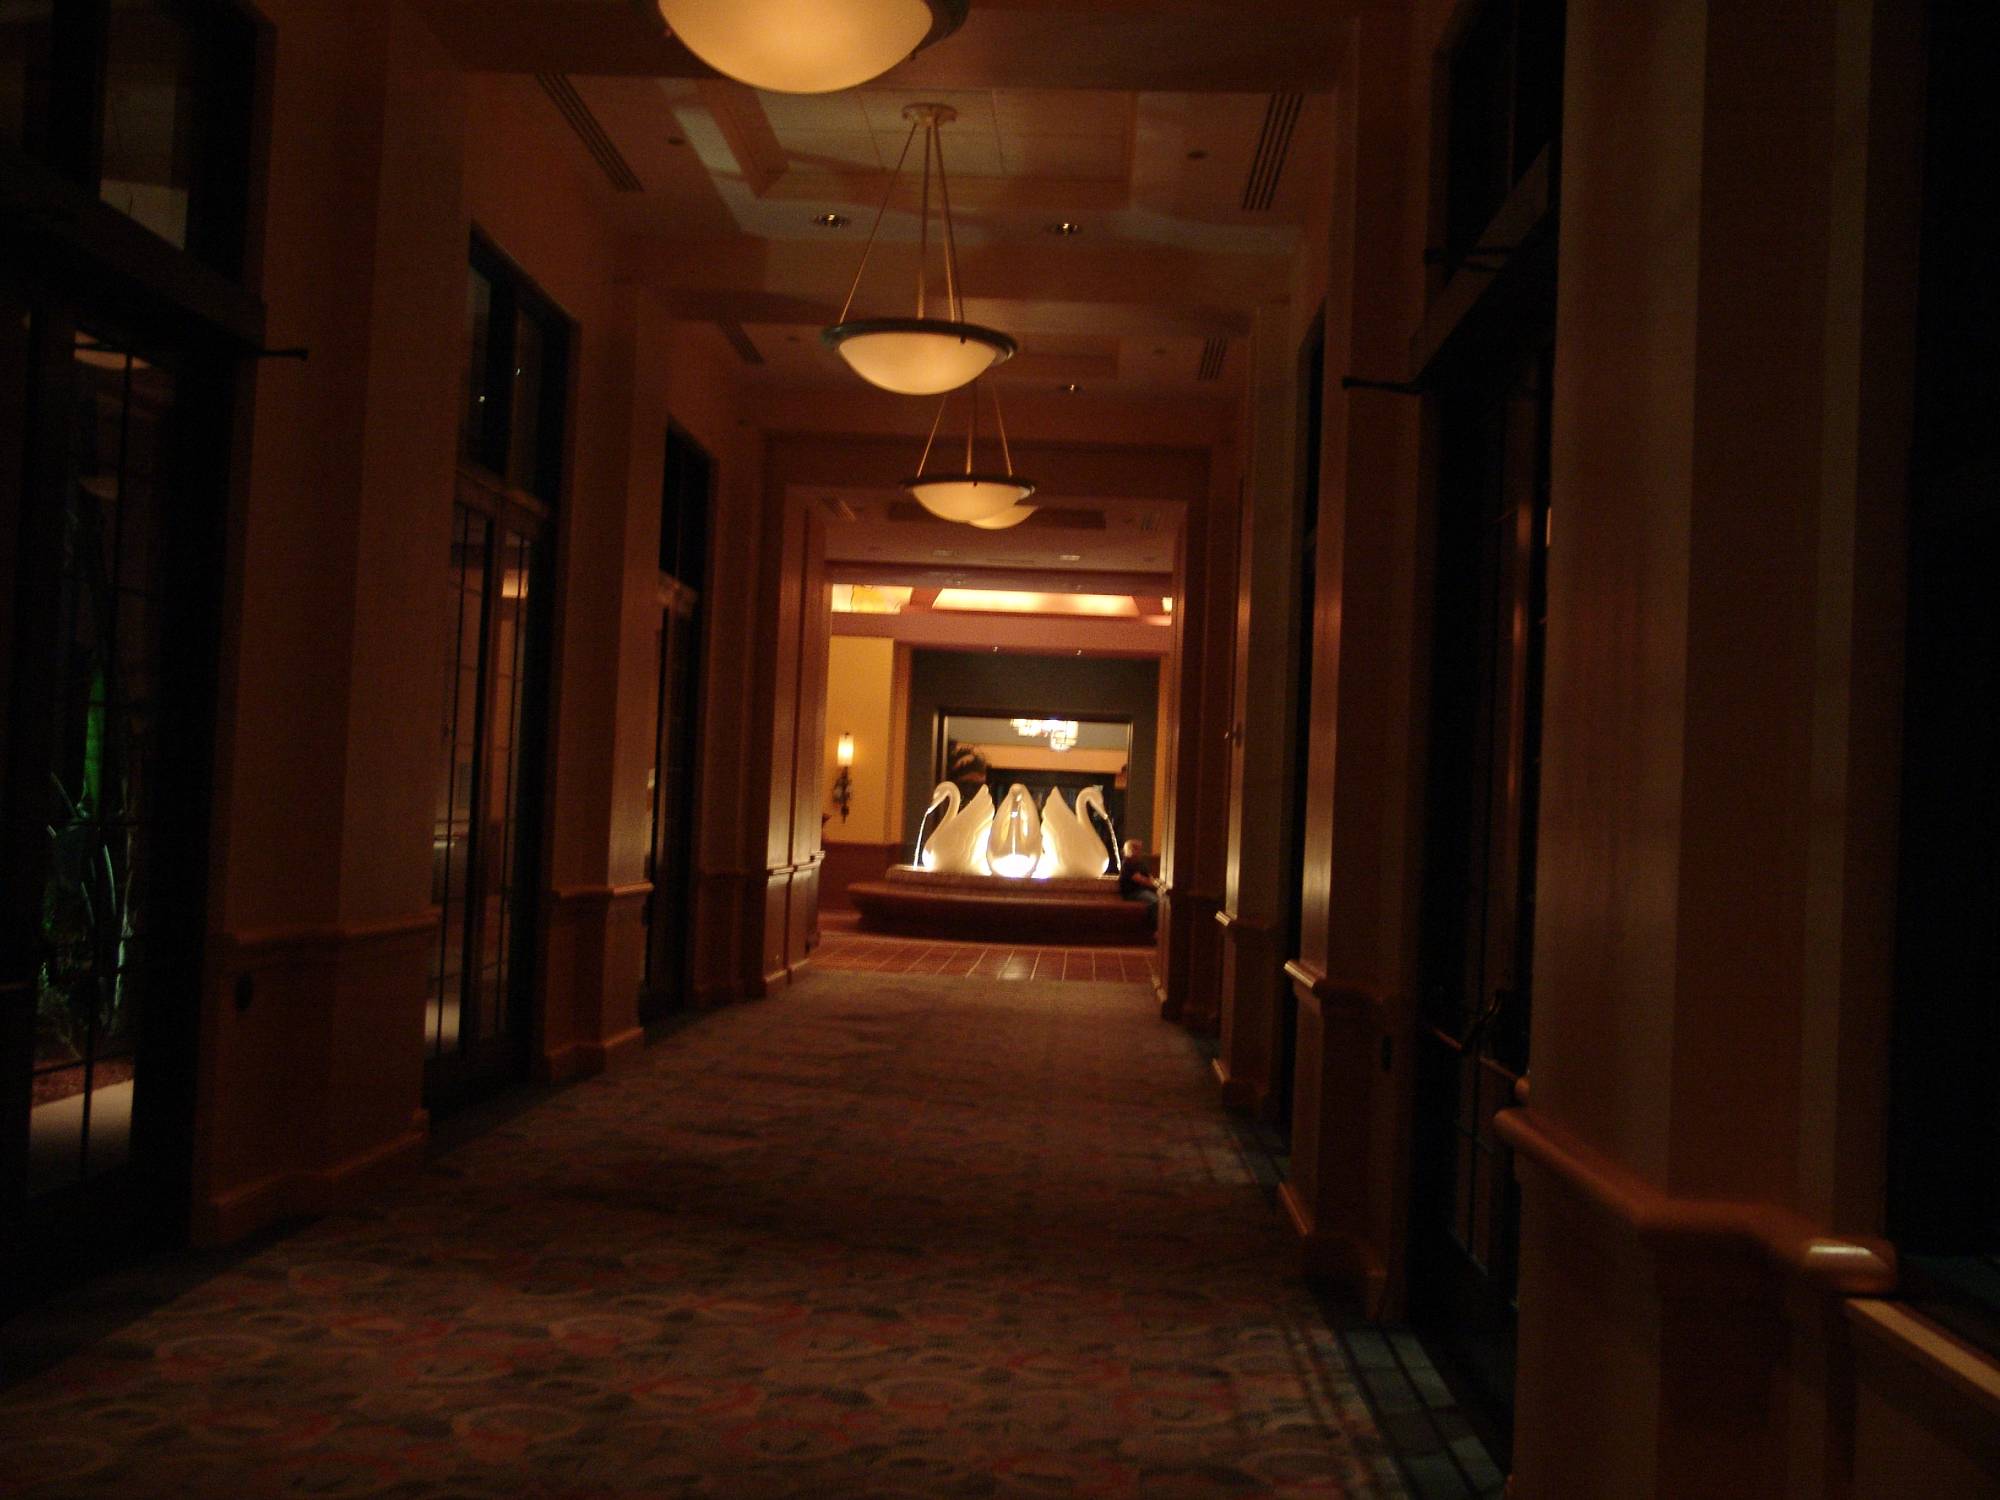 Swan - corridor leading to lobby